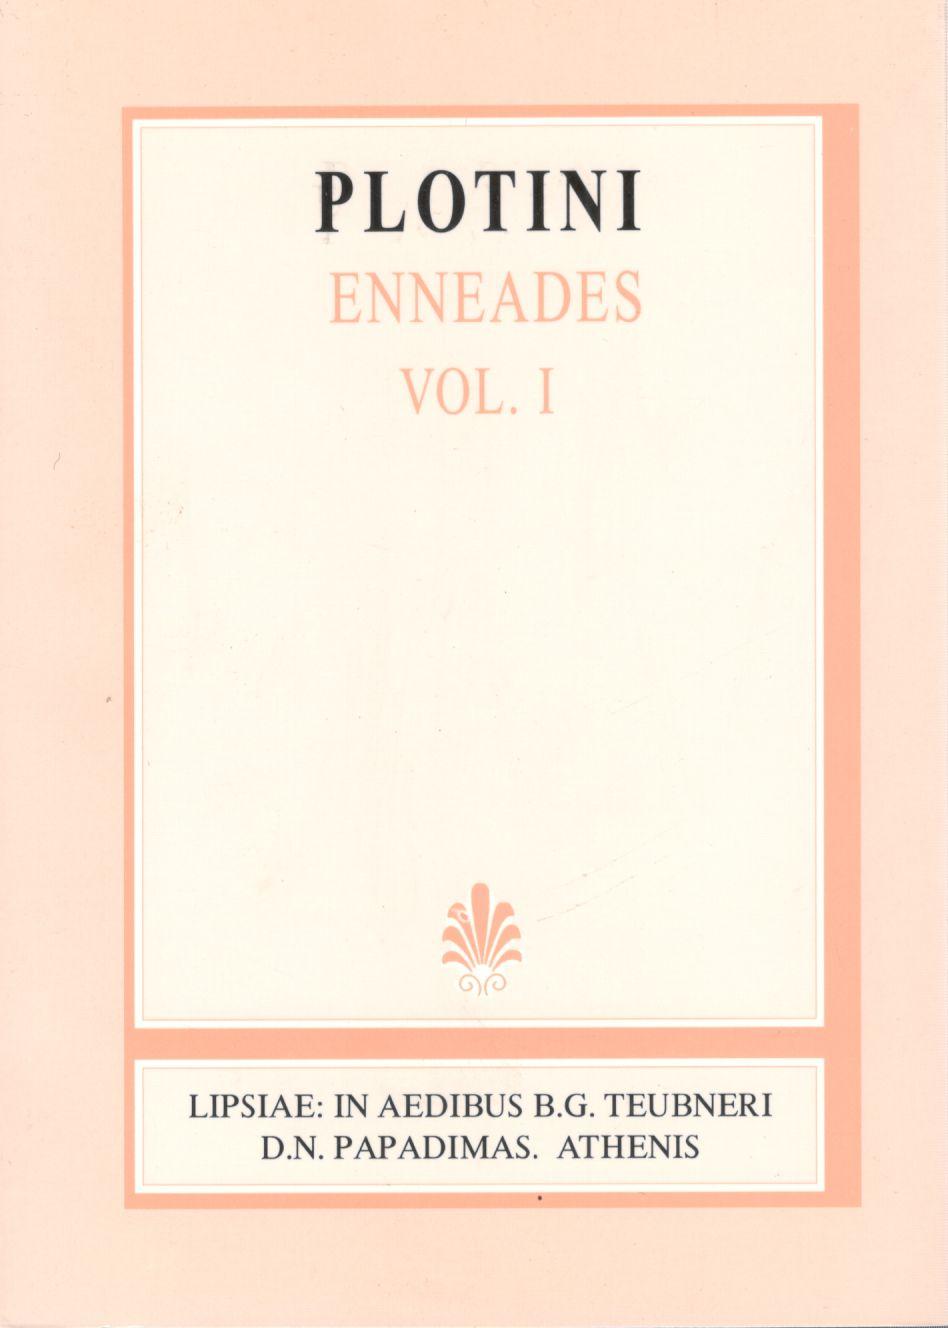 Plotini, Enneades, Vol. I, [Πλωτίνου, Εννεάδες, τ. Α']